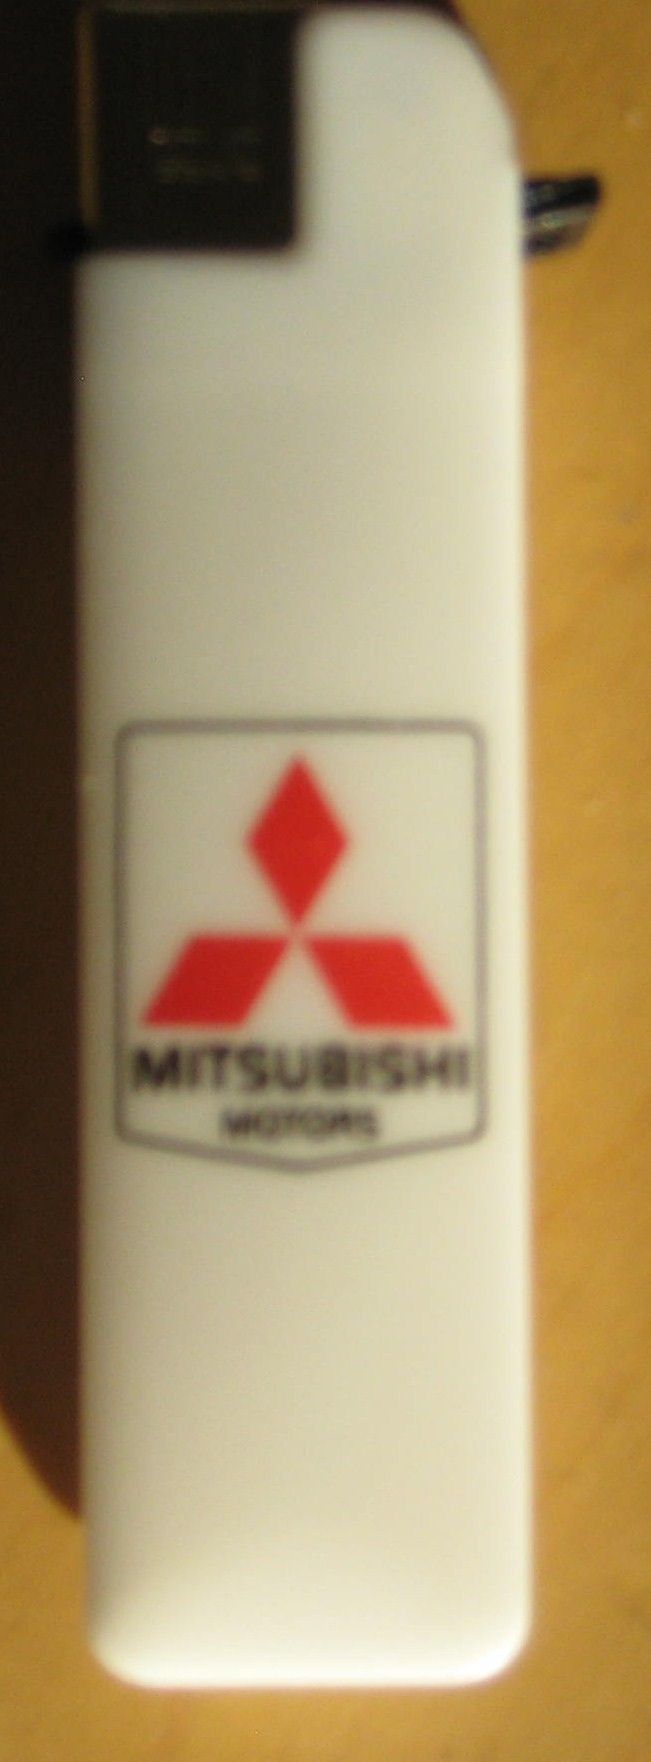 Keräilysytytin Mitsubishi-logolla. 1990-luku